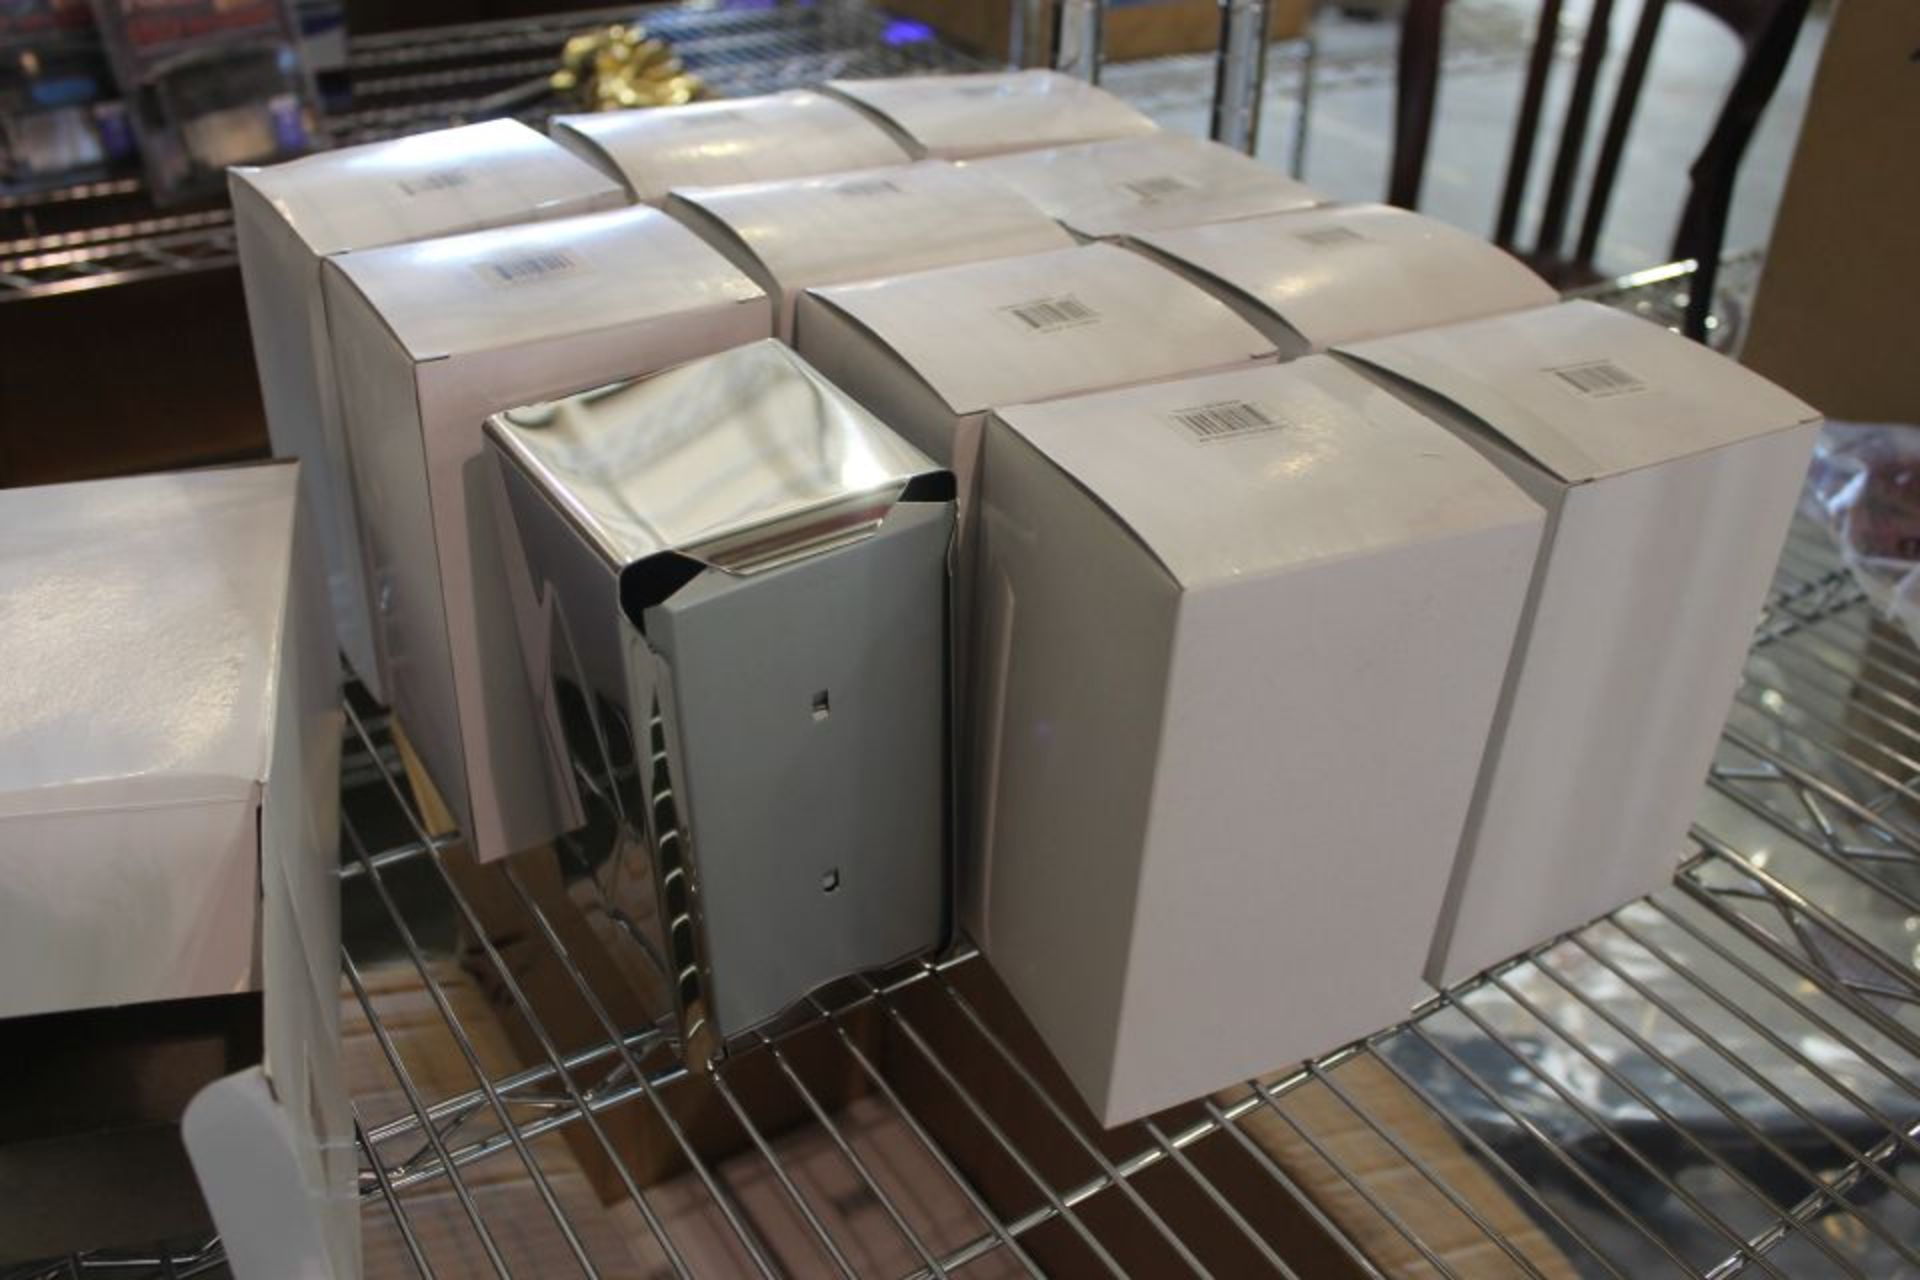 Napkin sispensers, lot of (11) chrome plated steel NEW for full size napkins - Image 2 of 2